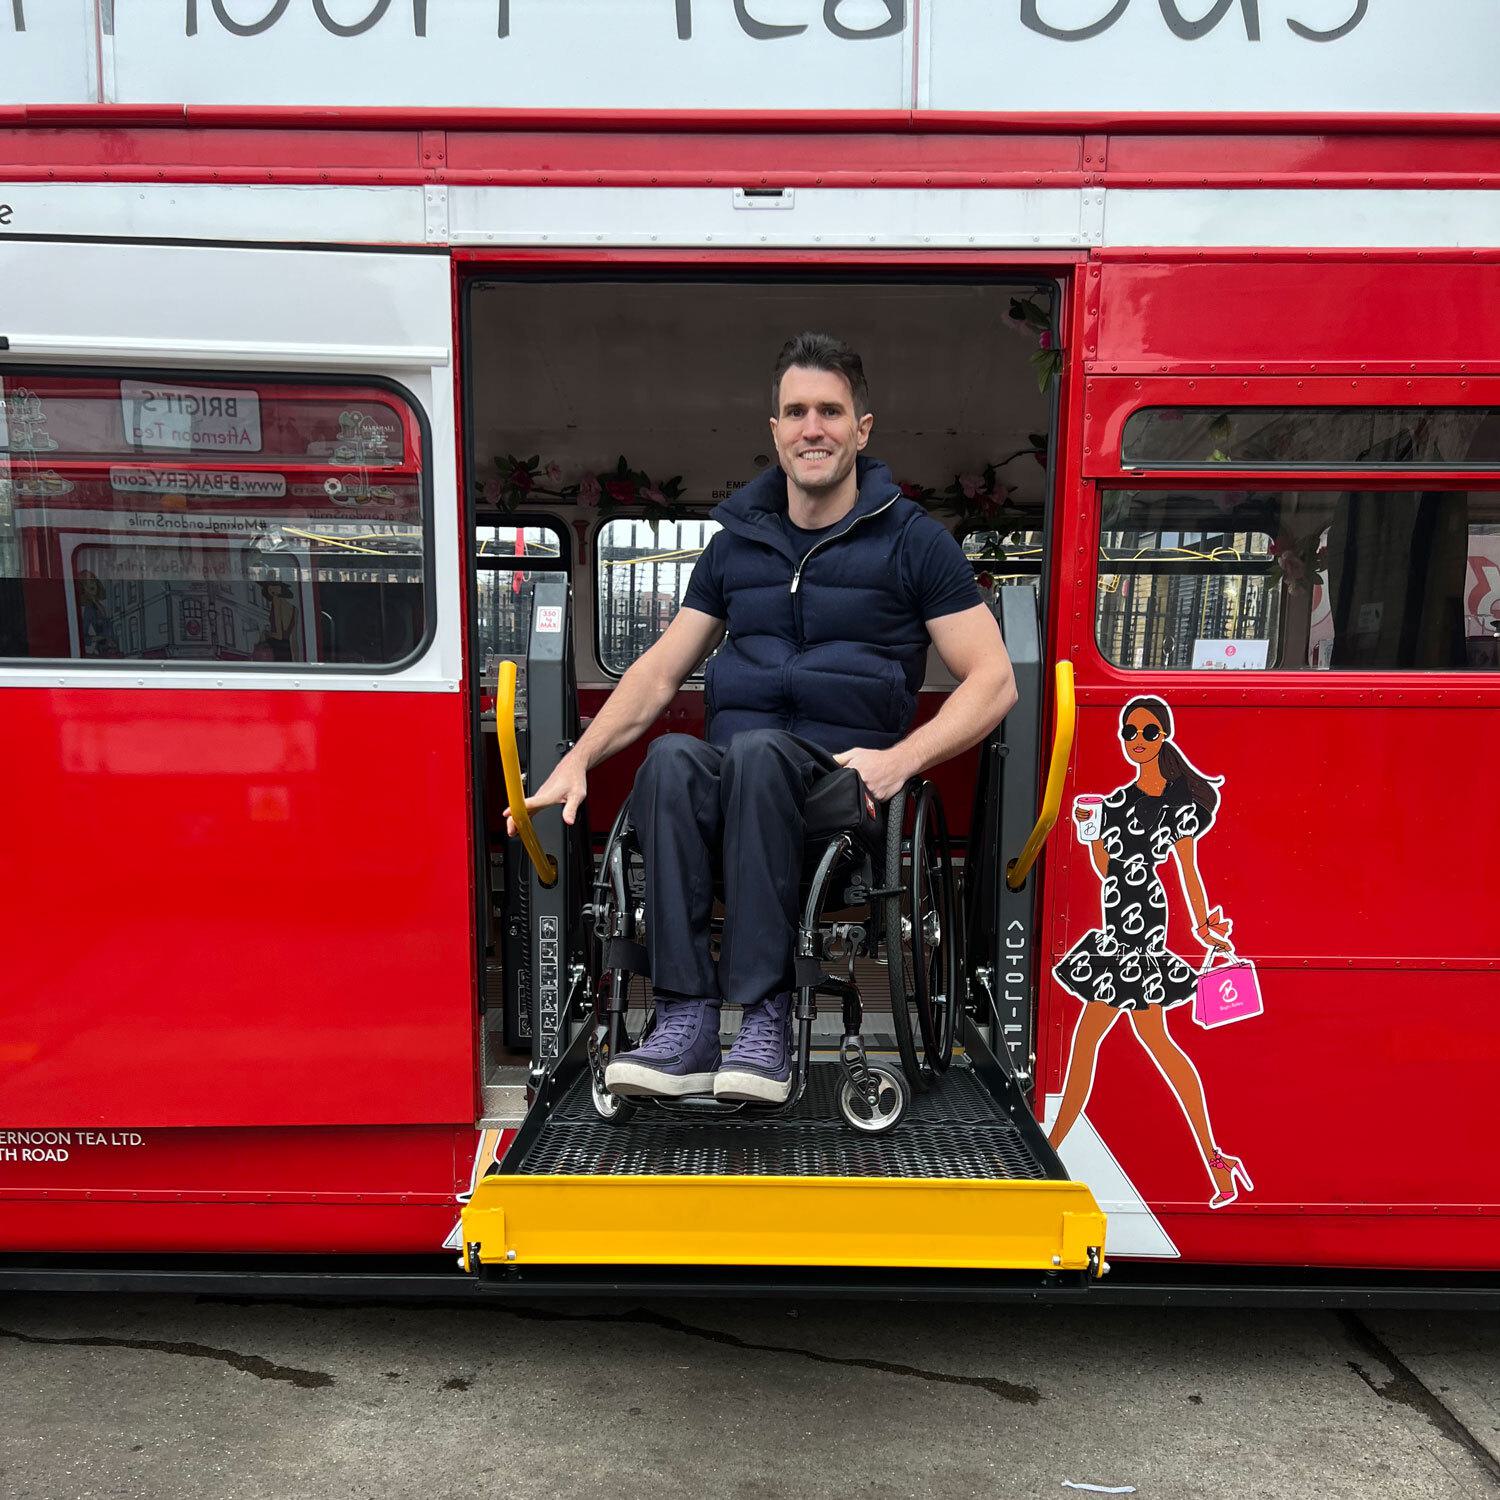 Wheelchair friendly afternoon tea bus tour - founder of Brigit's Bakery,Cedric Bloch